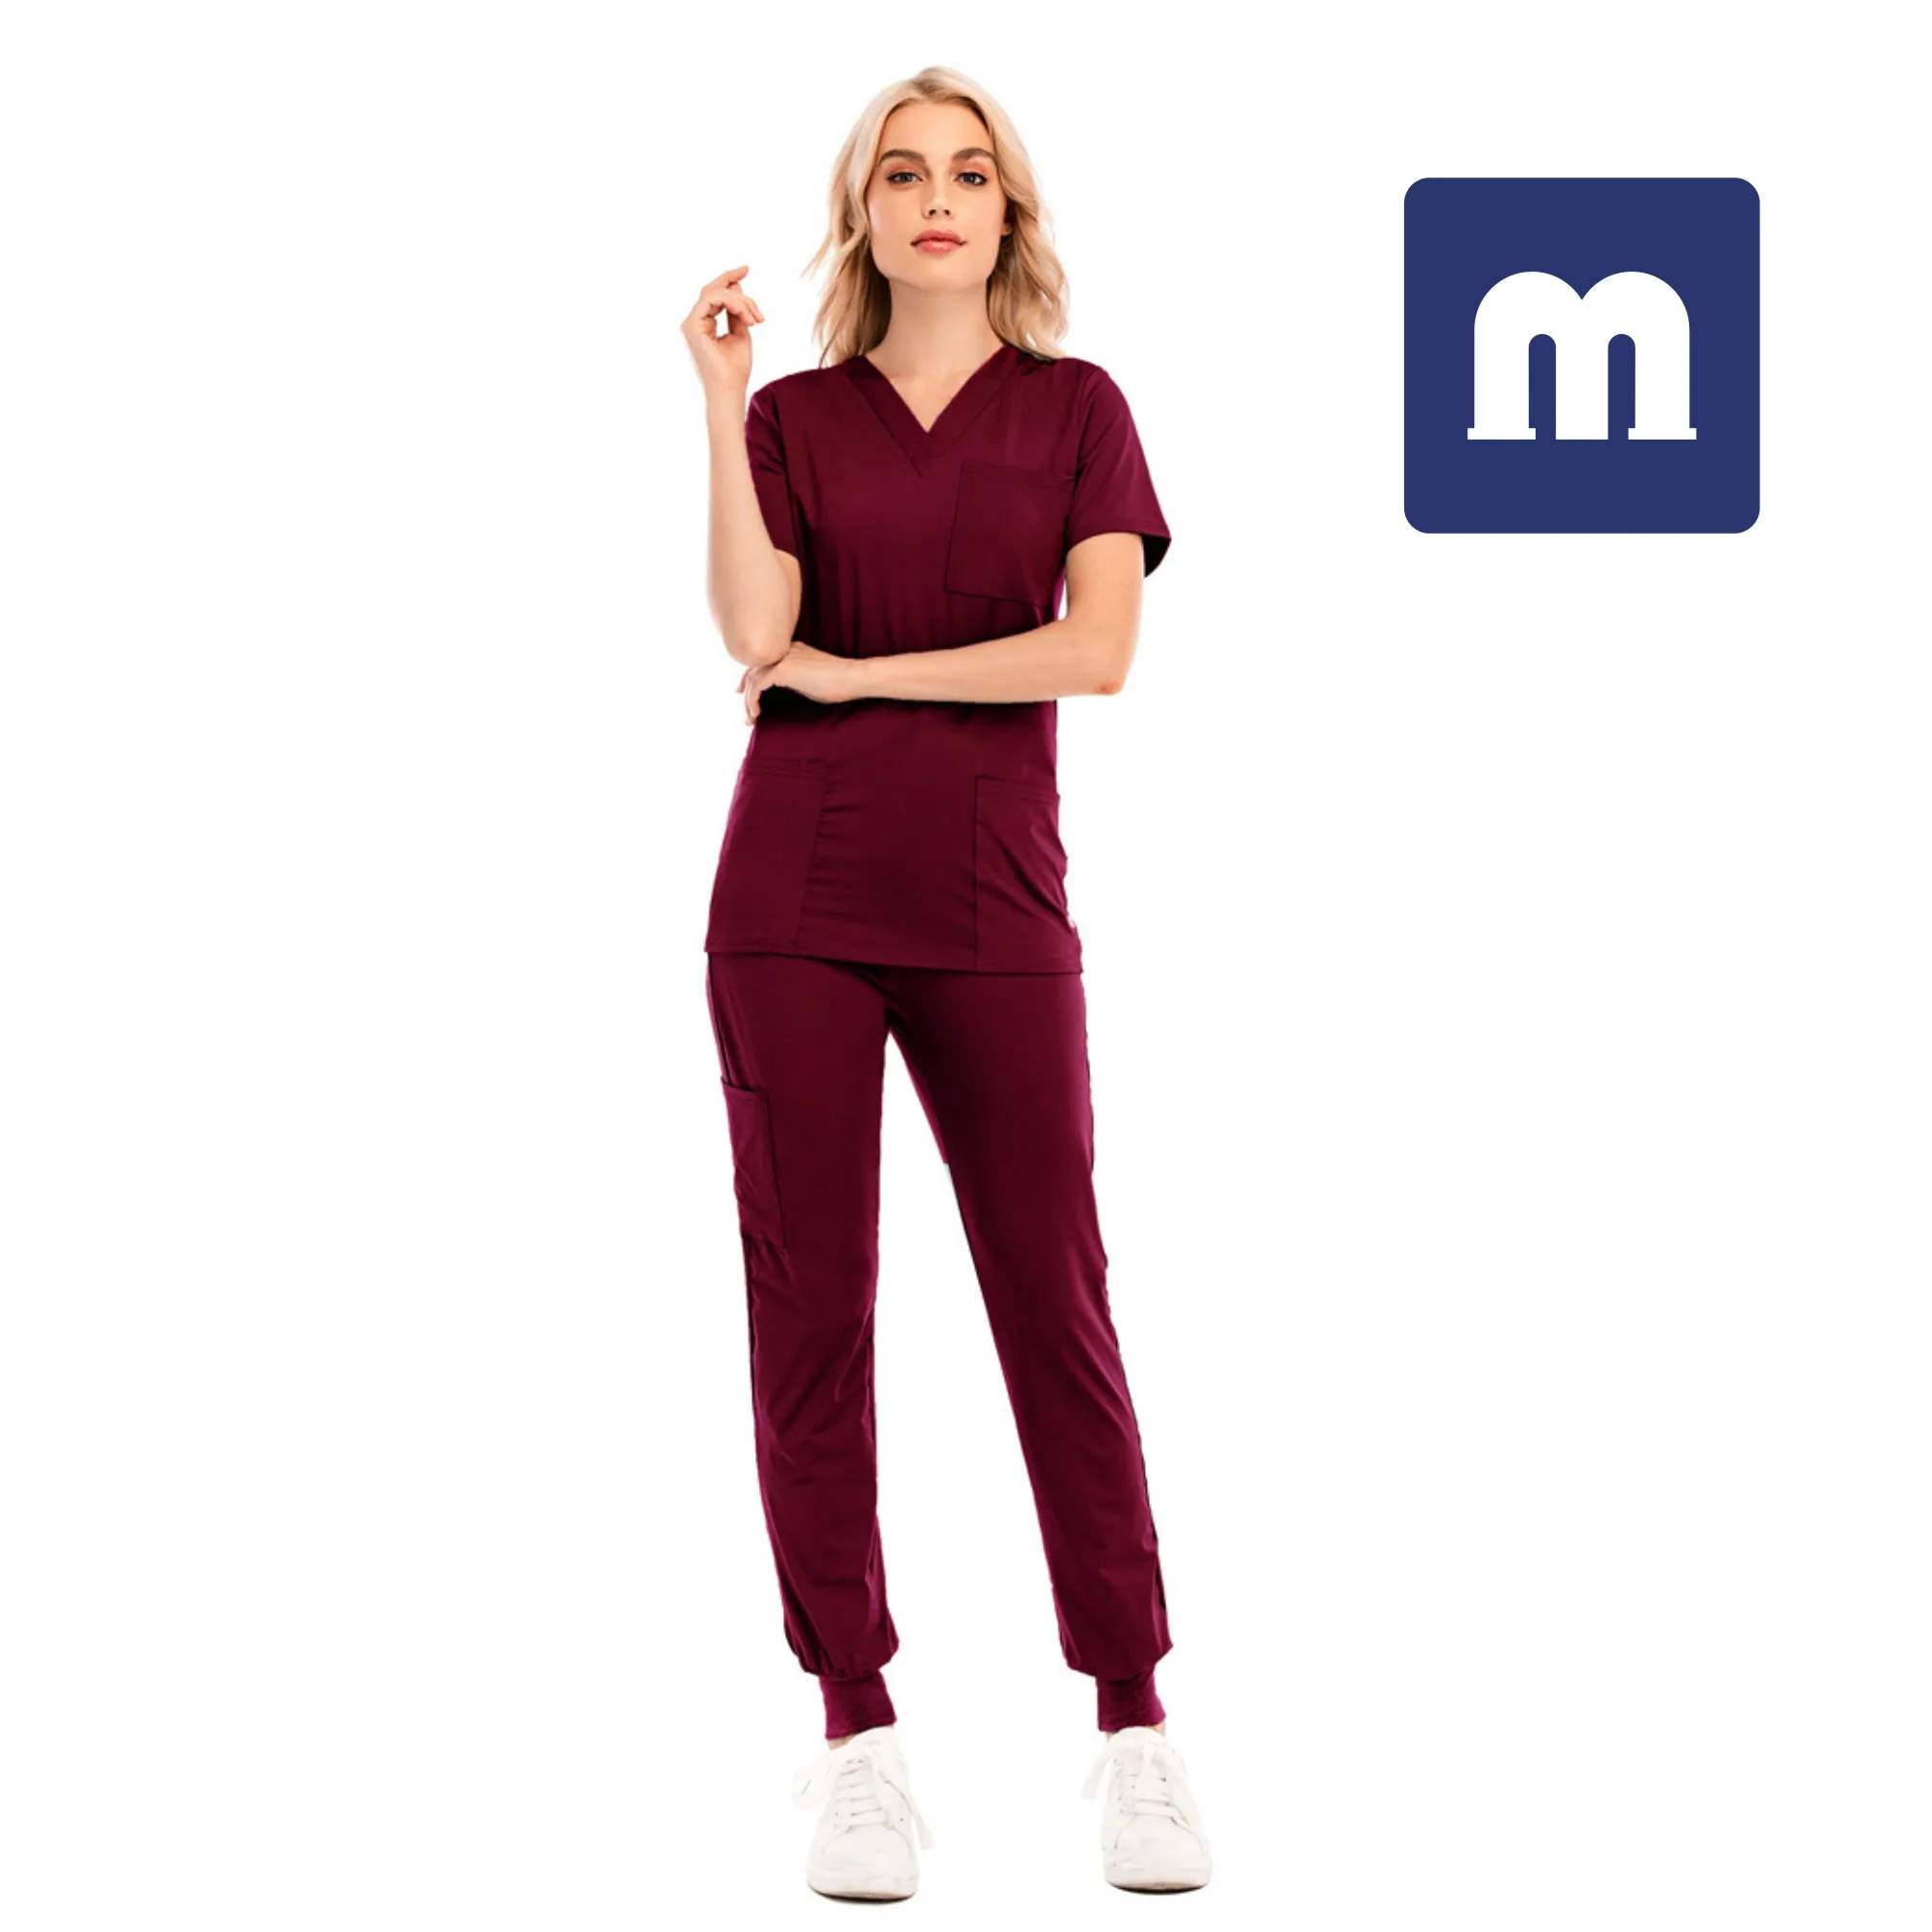 Medigo-035 Pantaloni a due pezzi da donna Tinta unita Spa Filettato Abiti da lavoro da clinica Top + pantaloni Unisex Scrubs Pet Nursing Hospital Uniform Suit